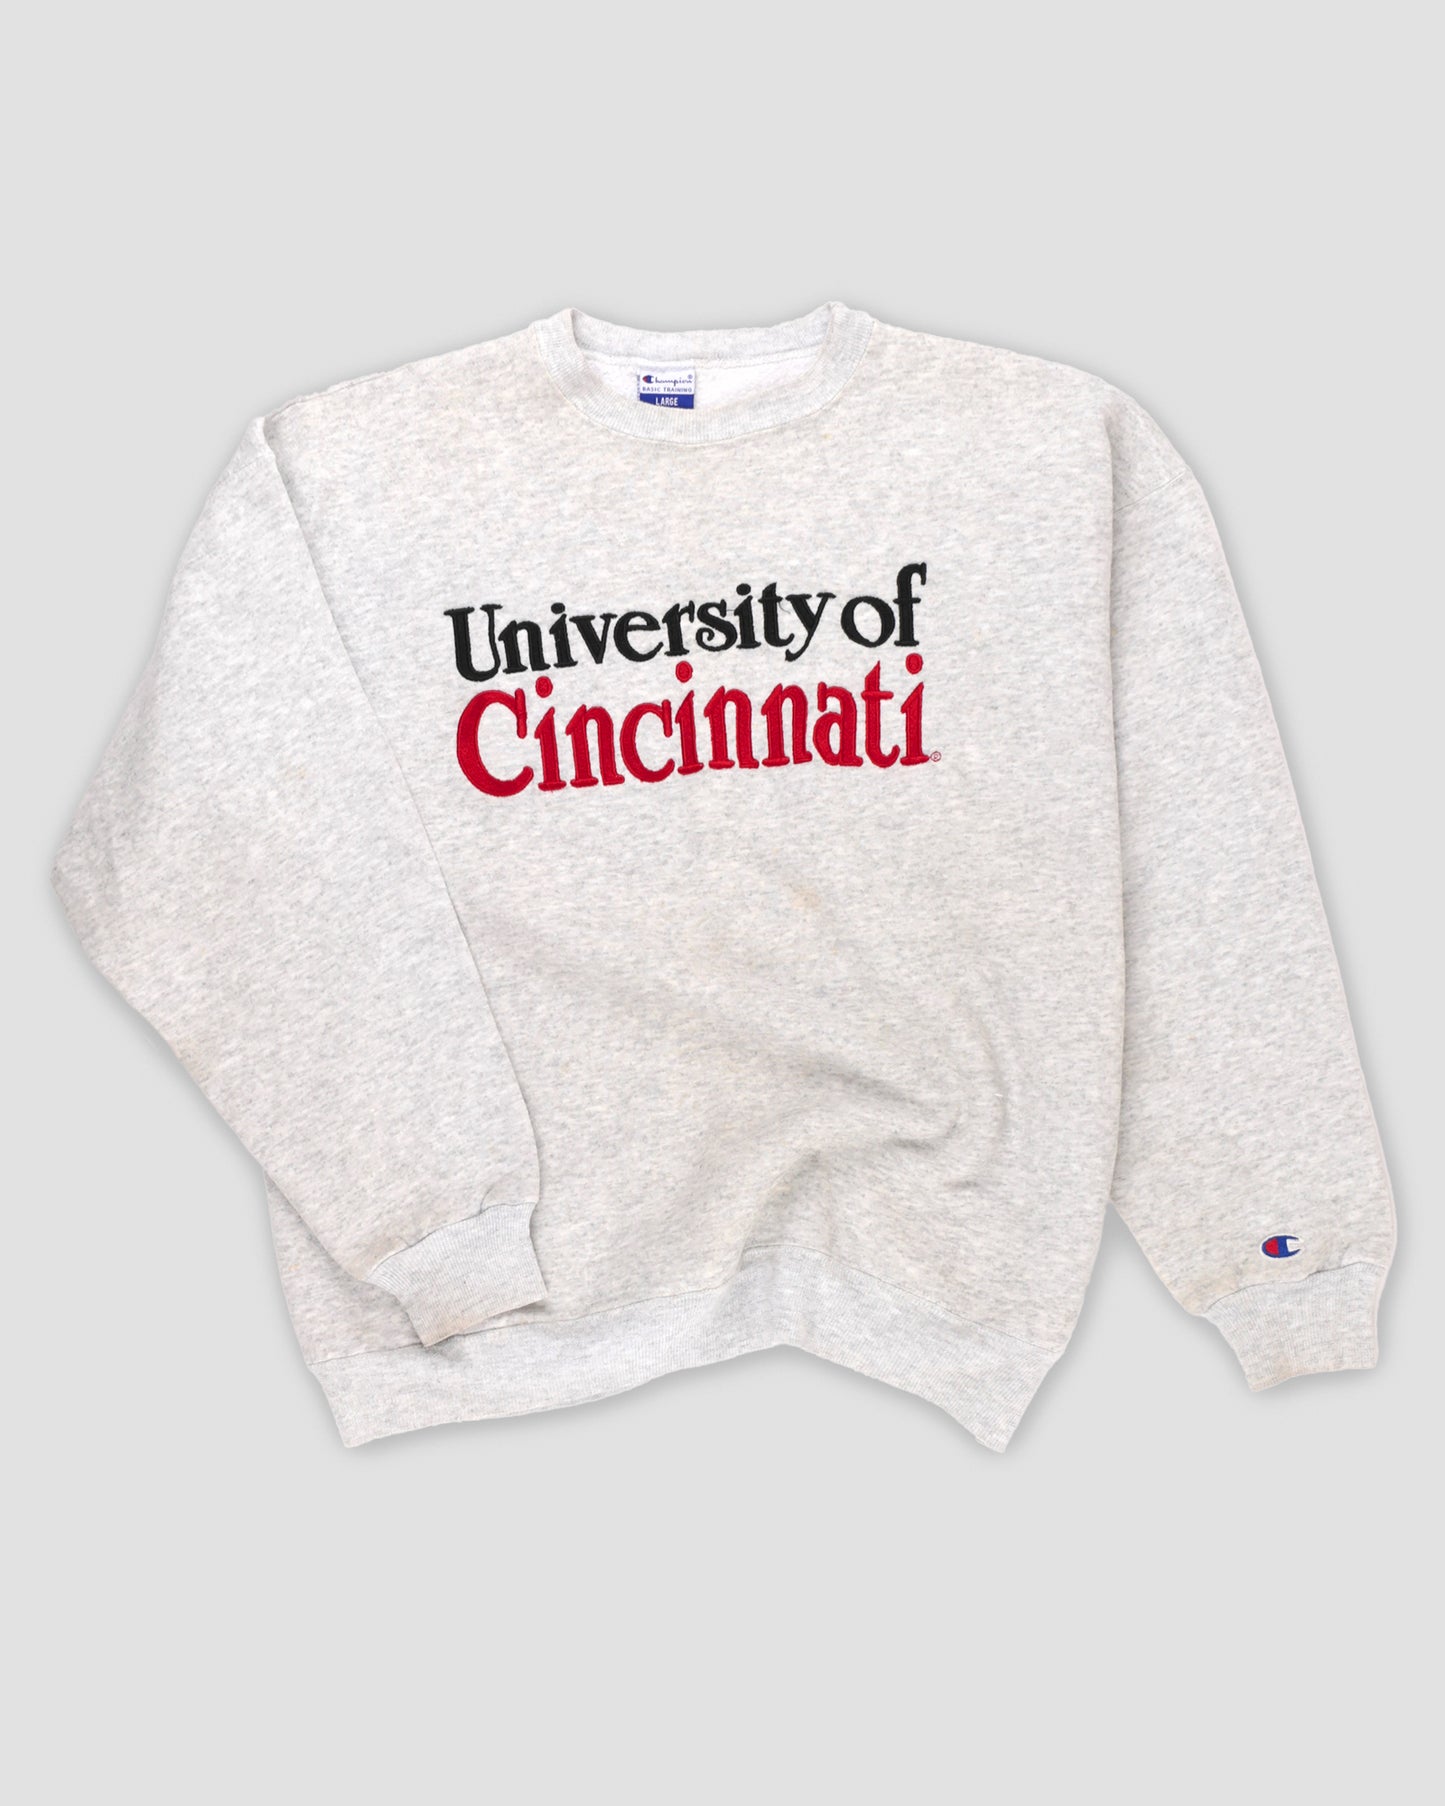 SWEATSHIRT - Vintage Champion Cincinnati University L